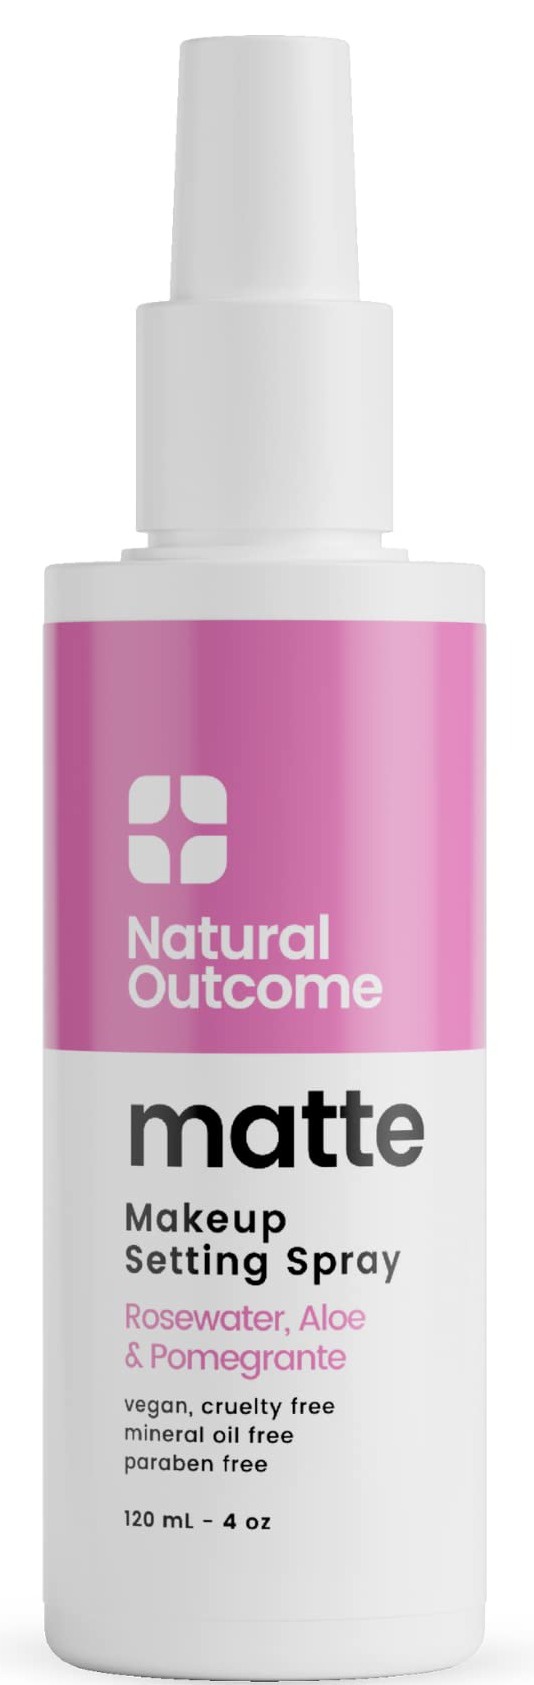 Natural Outcome Matte - Makeup Setting Spray